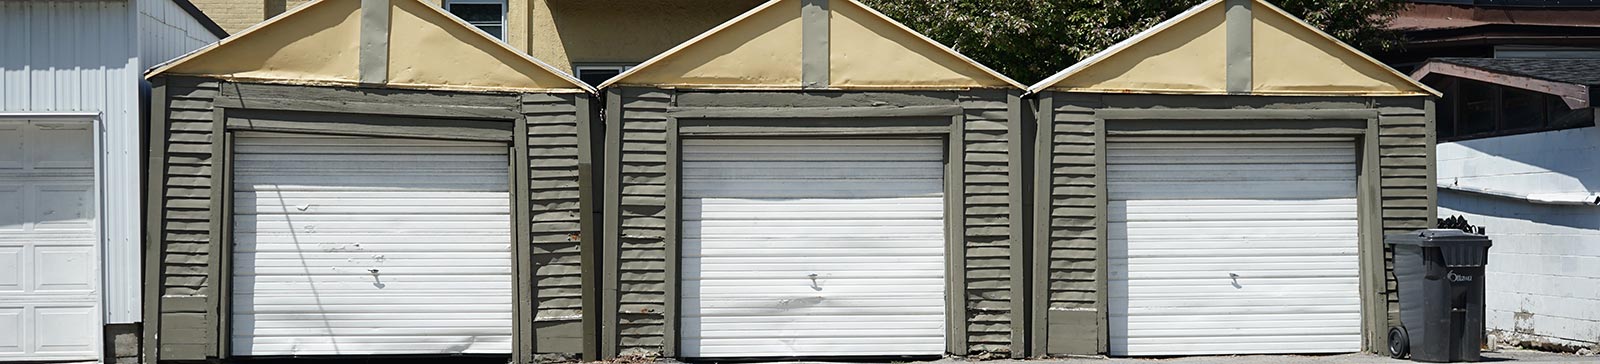 Garage Door Maintenance Near Me | Carlsbad, CA